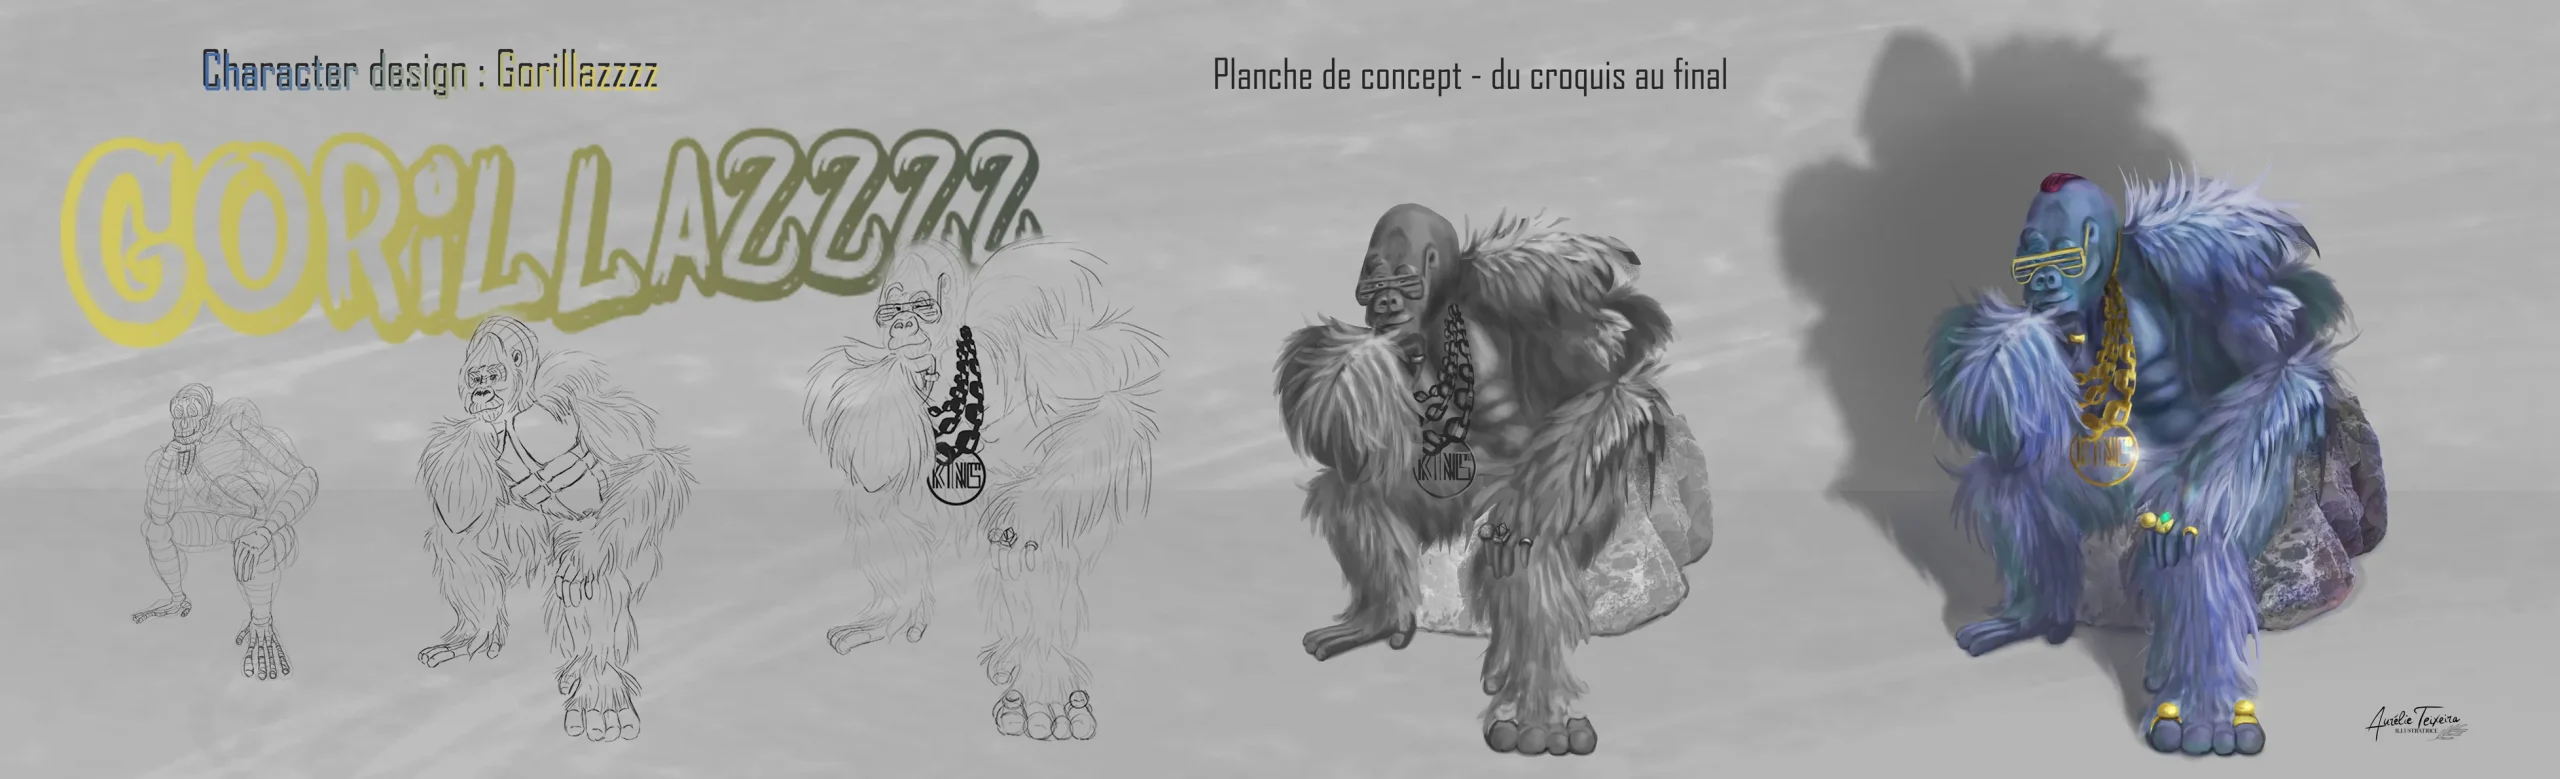 chara-design-gorilla-concept